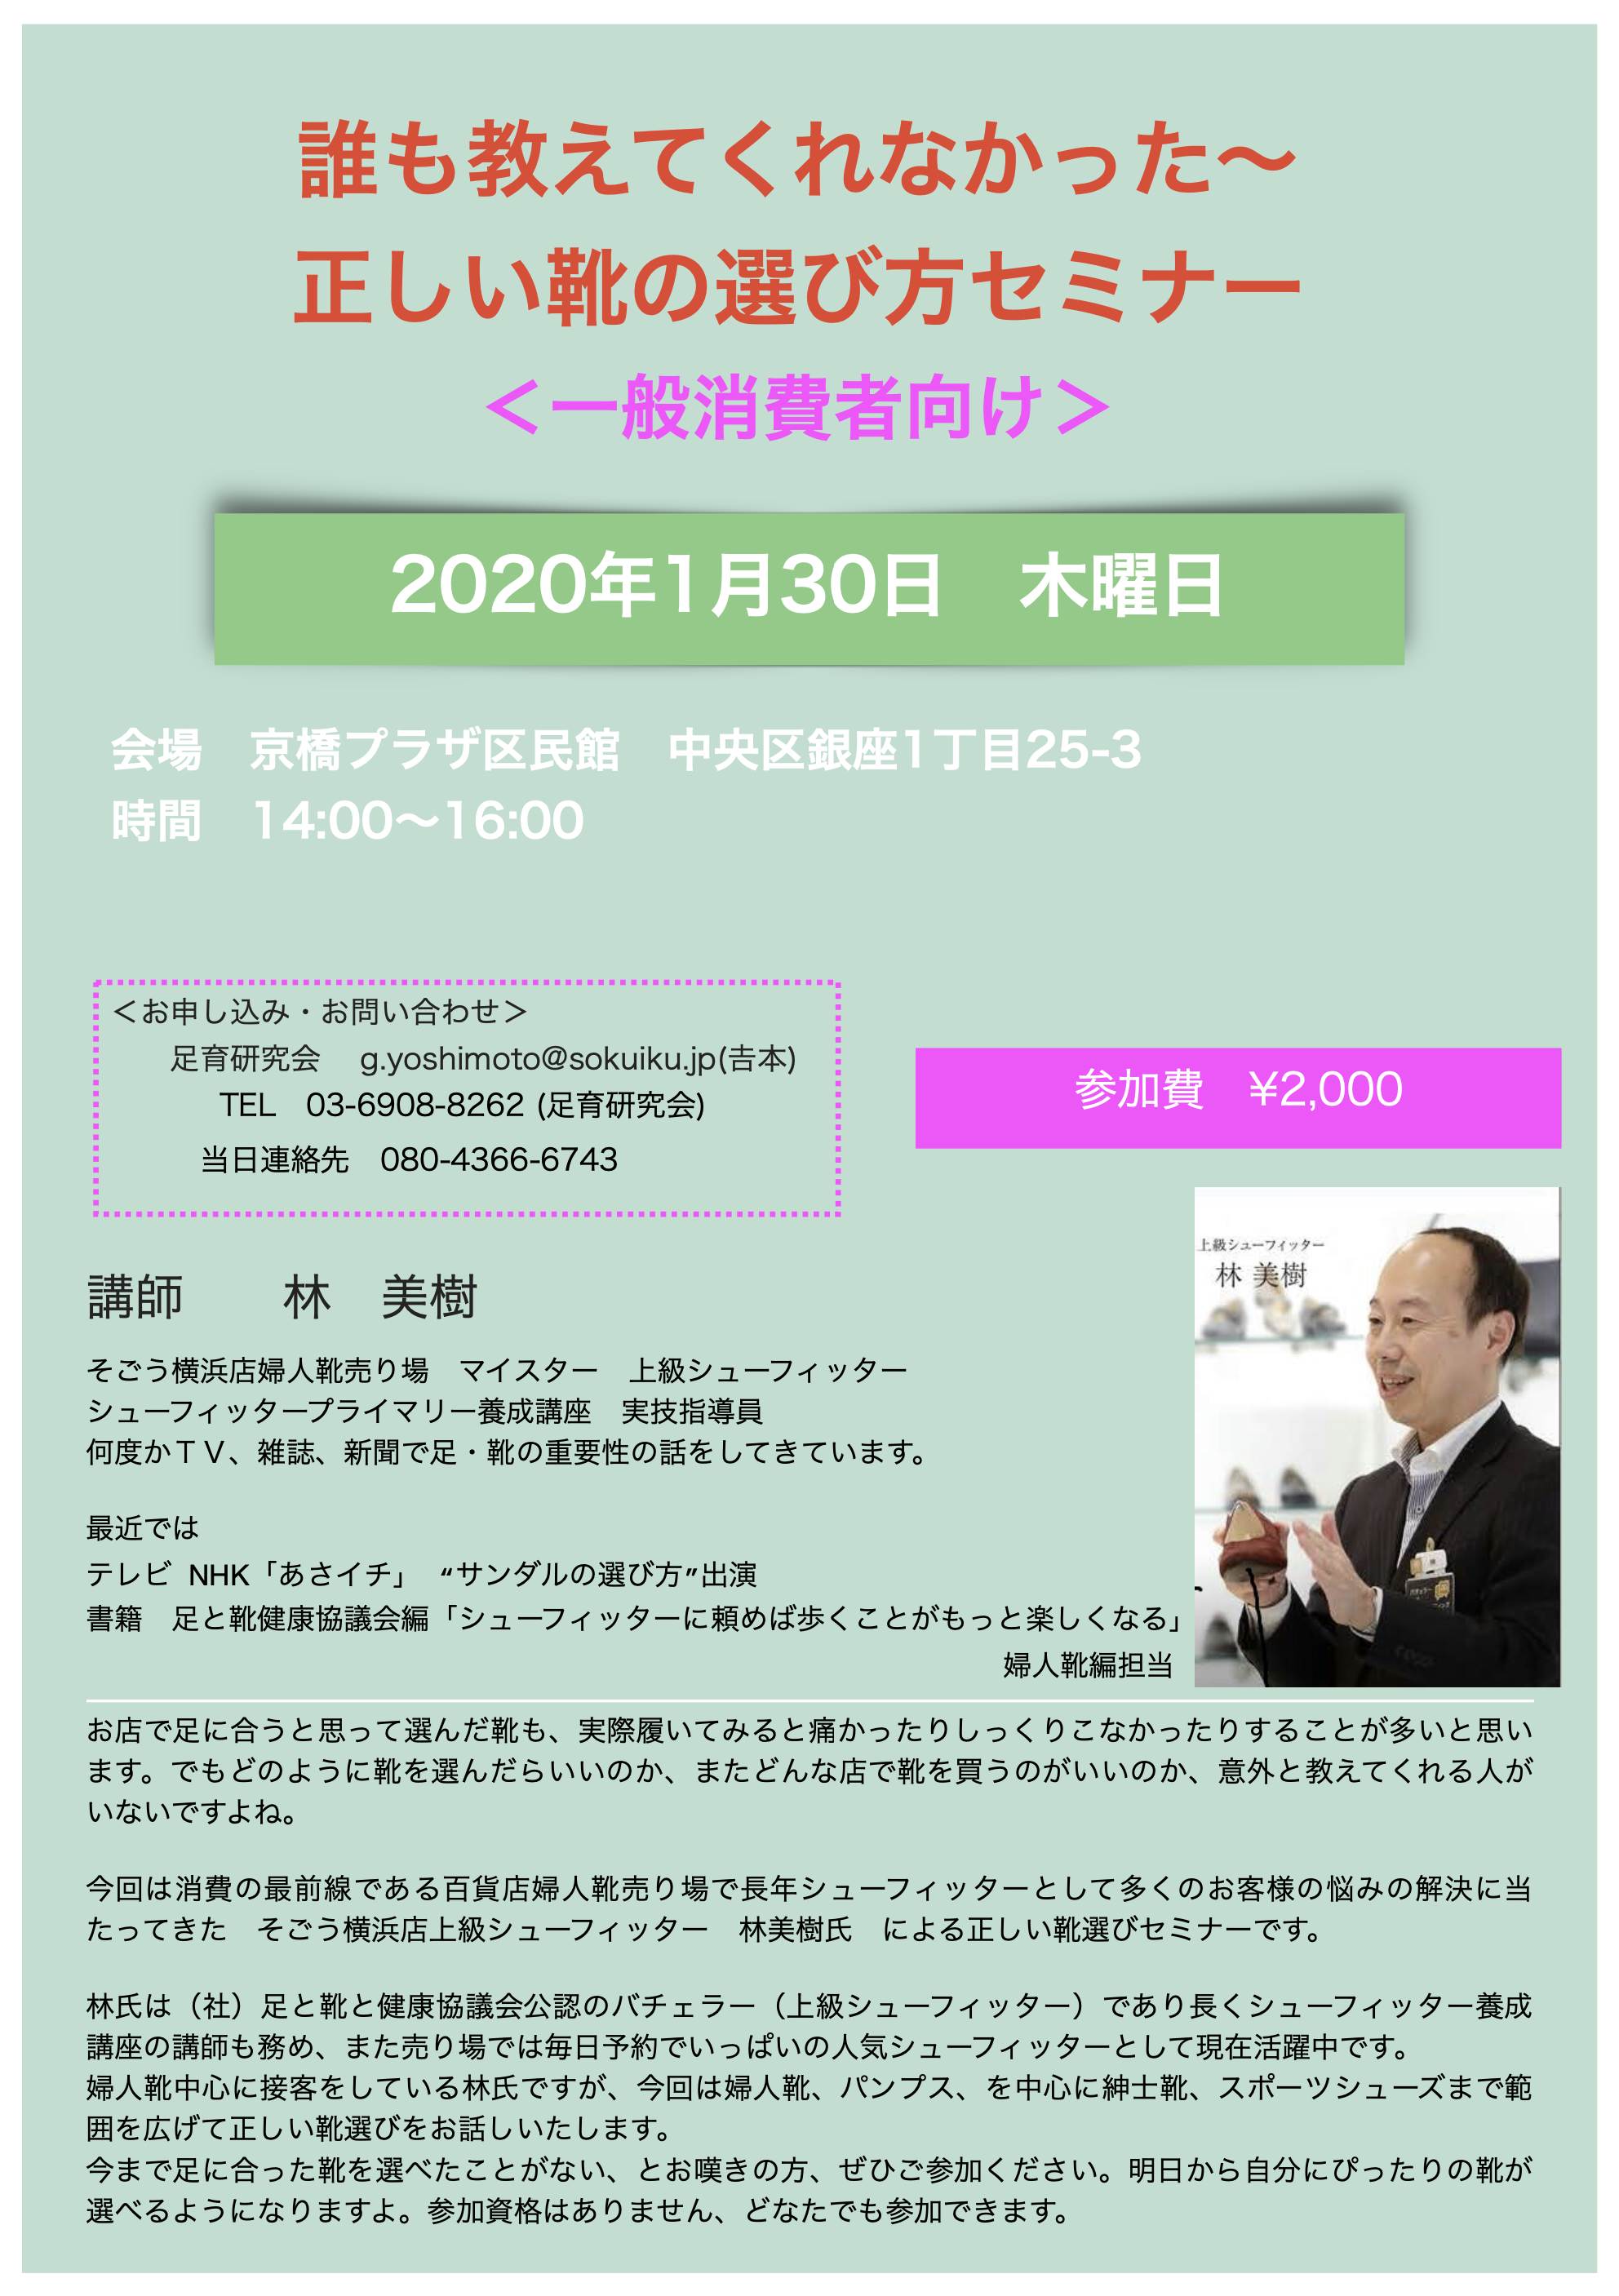 https://www.sokuiku.jp/photo/20200130_event.png